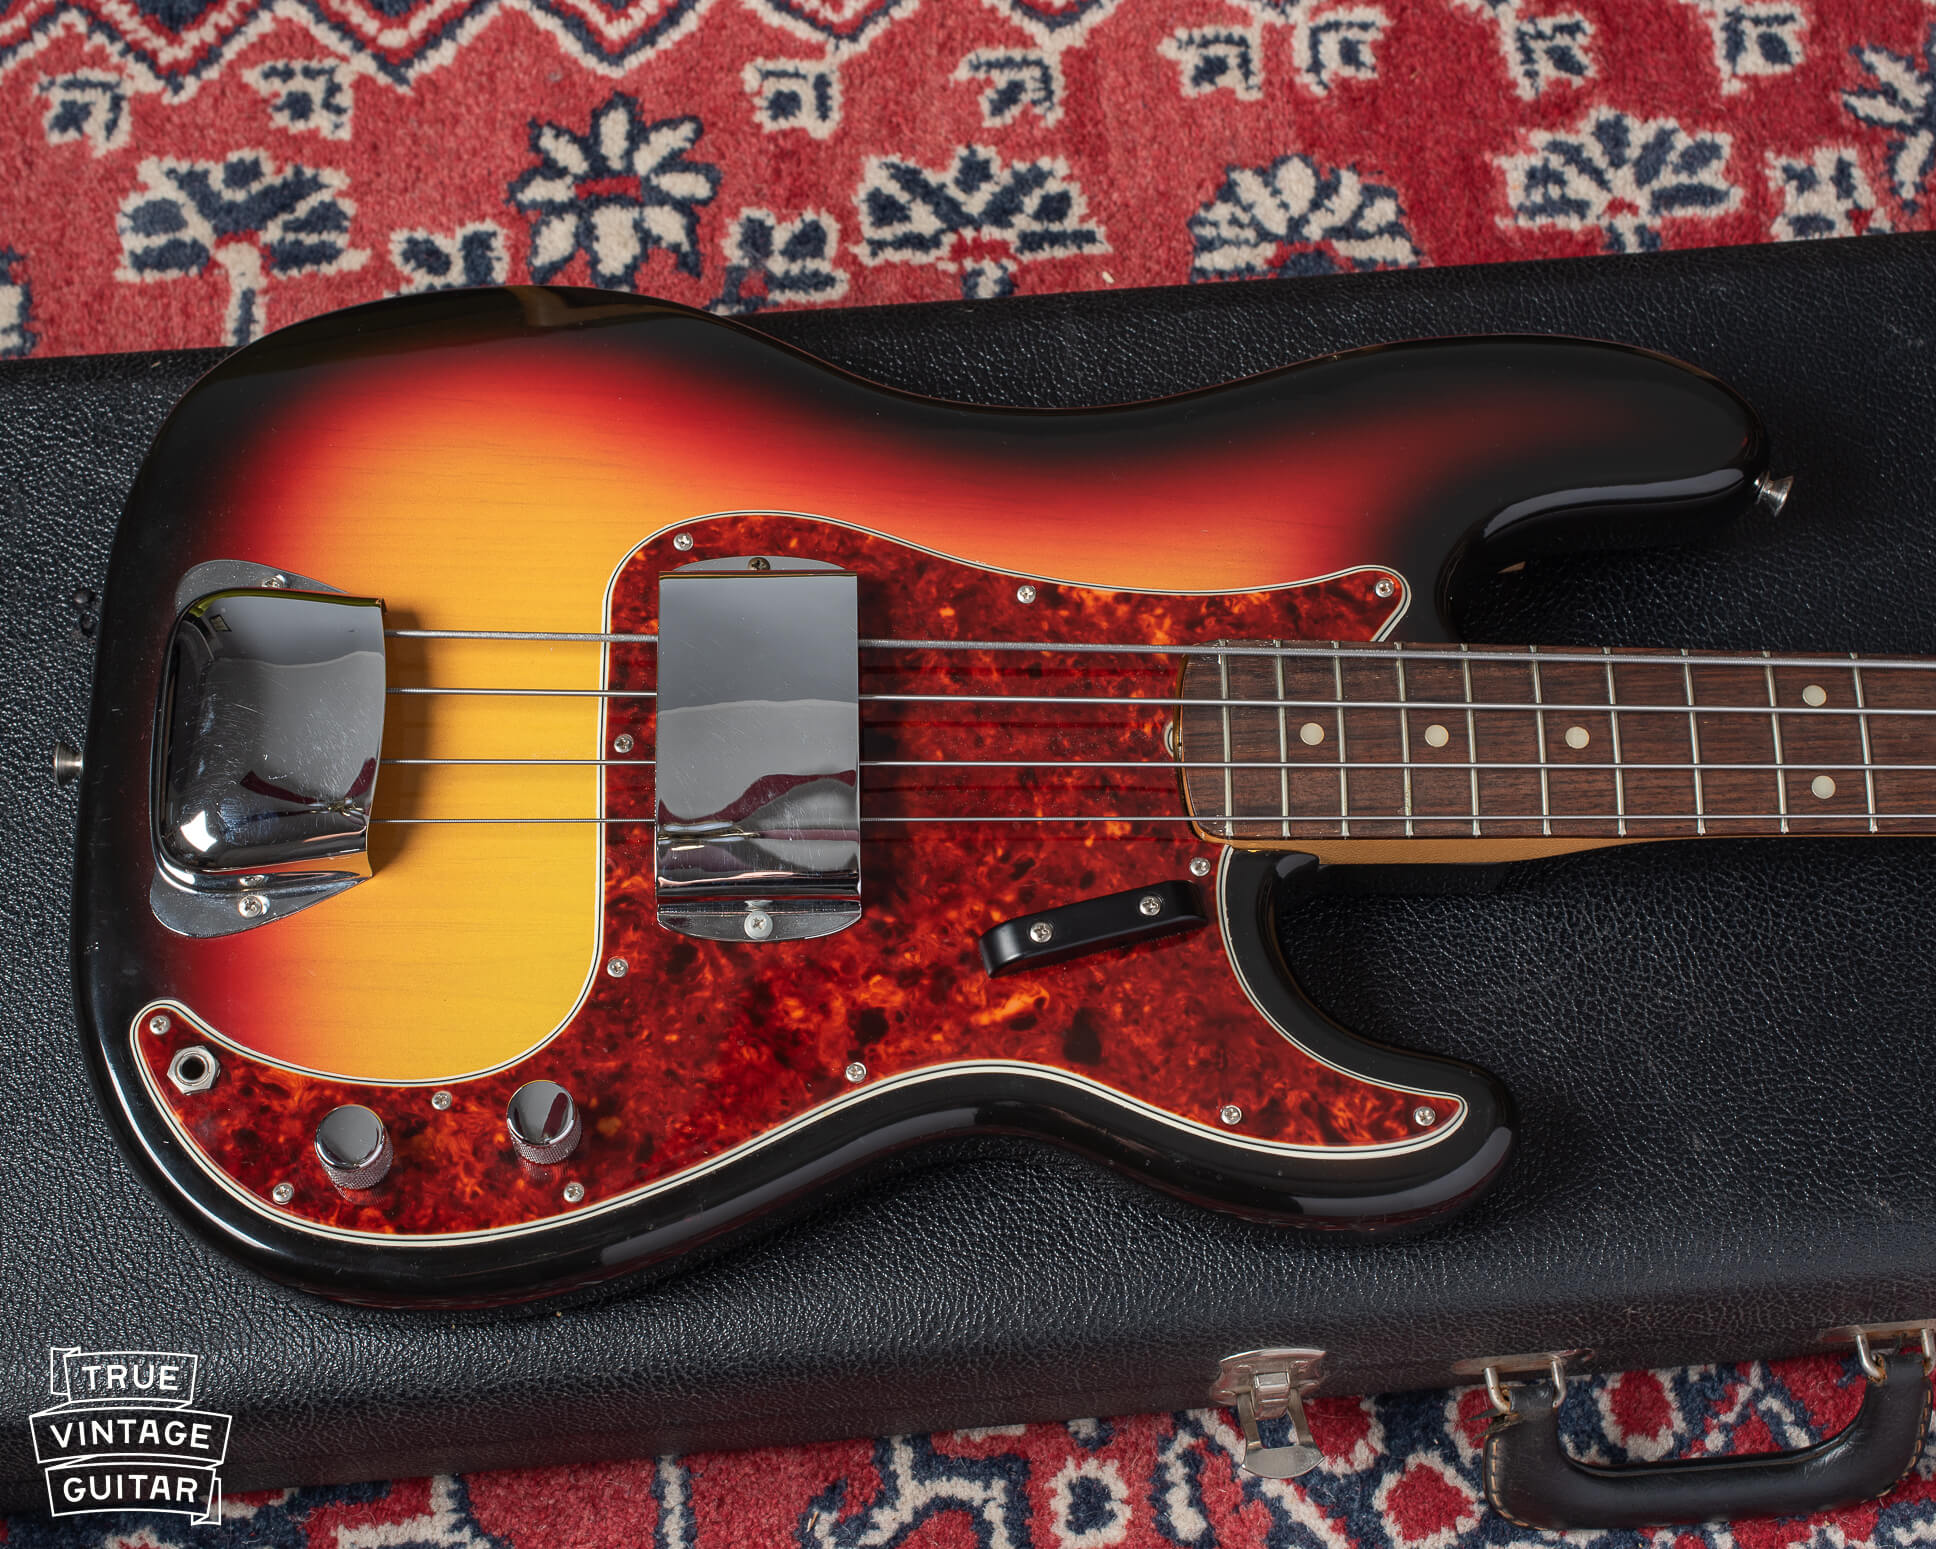 Sunburst finish with red tortoiseshell pickguard on 1966 Fender Precision Bass